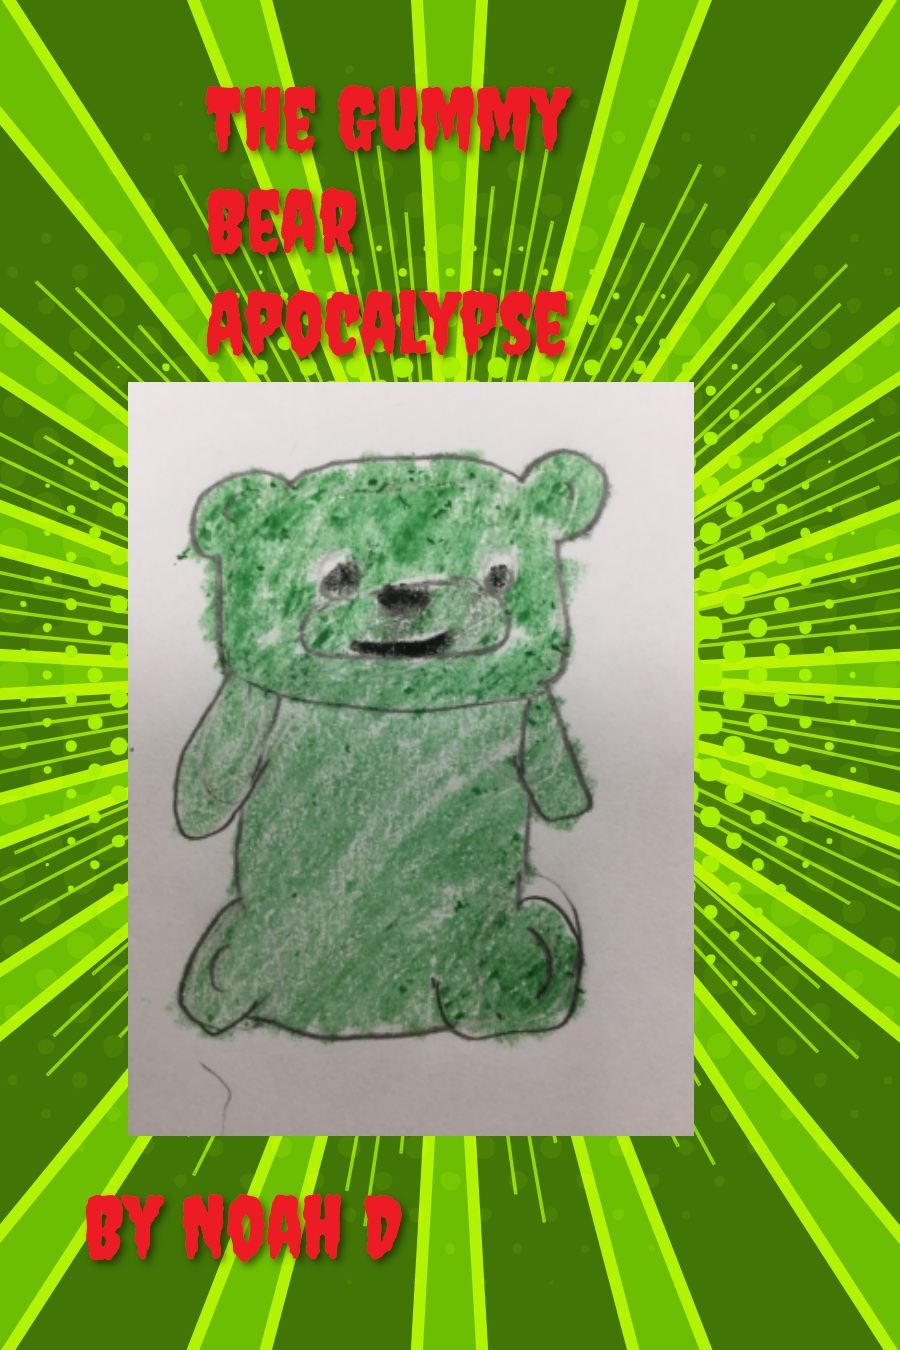 The Gummy Bear Apocalypse by Noah D